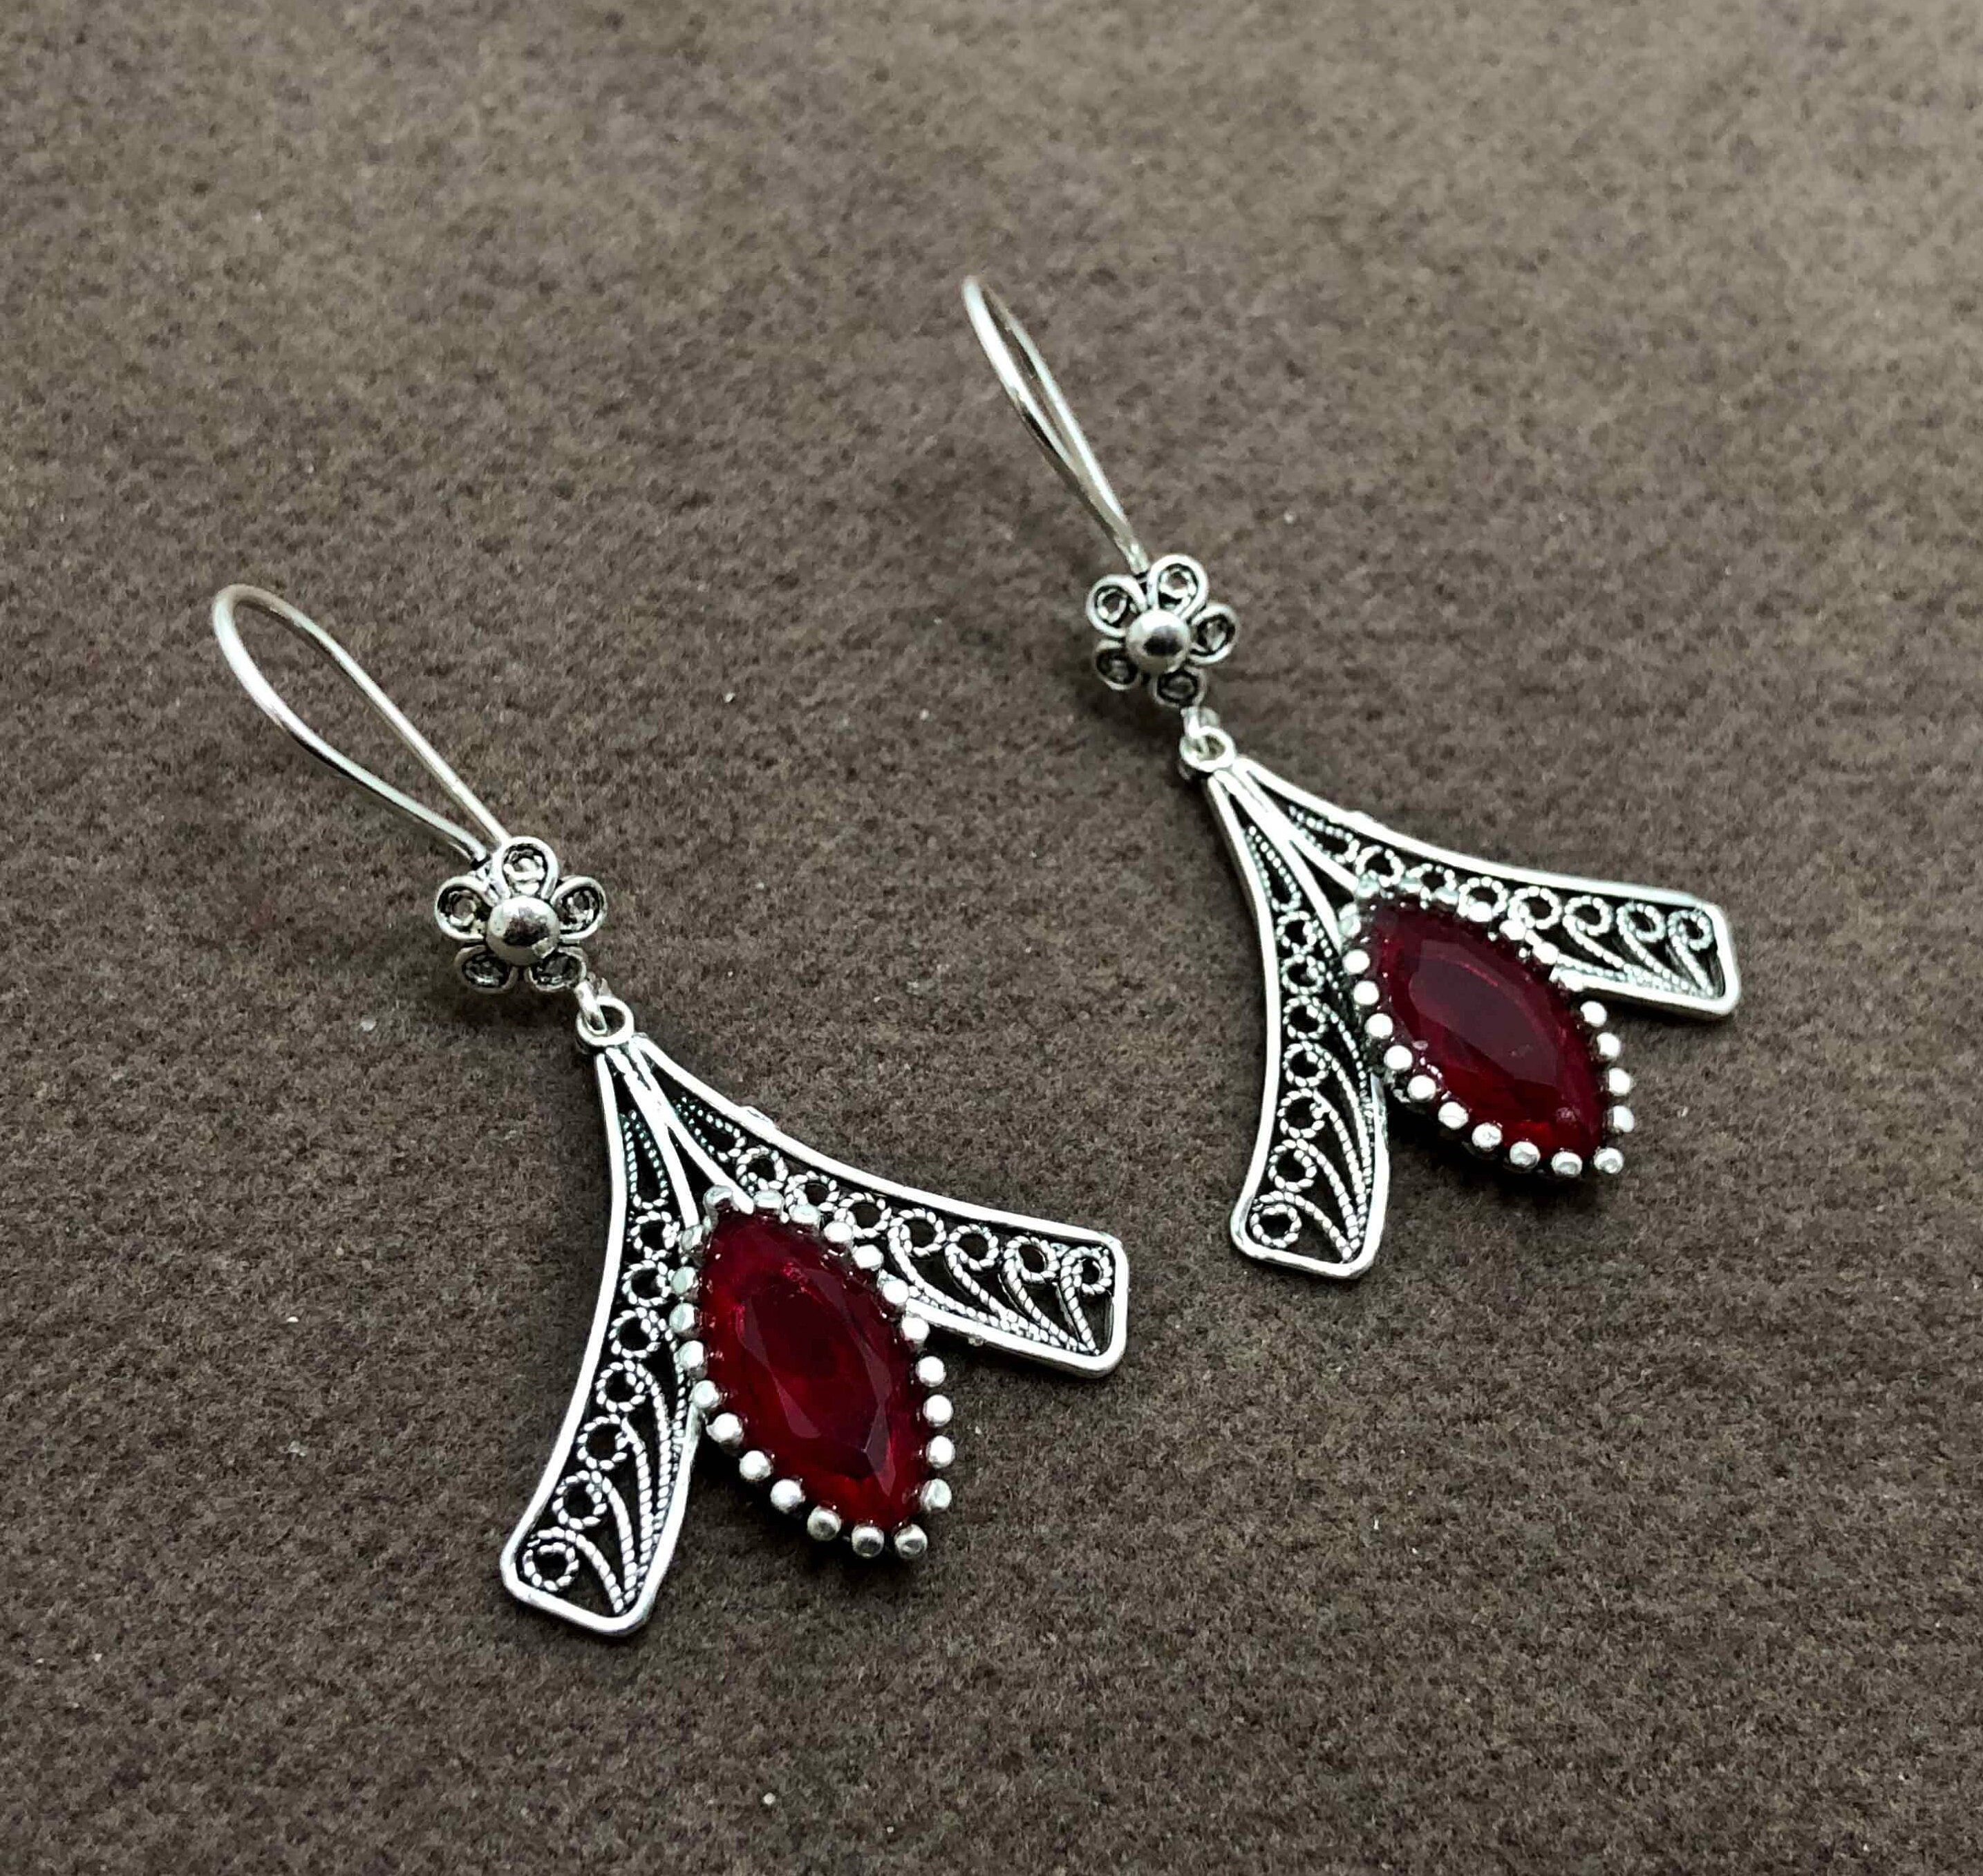 Buy Silver Turkish Gypsy Filigree Earrings Ethnic Jewelry Online in India   Etsy